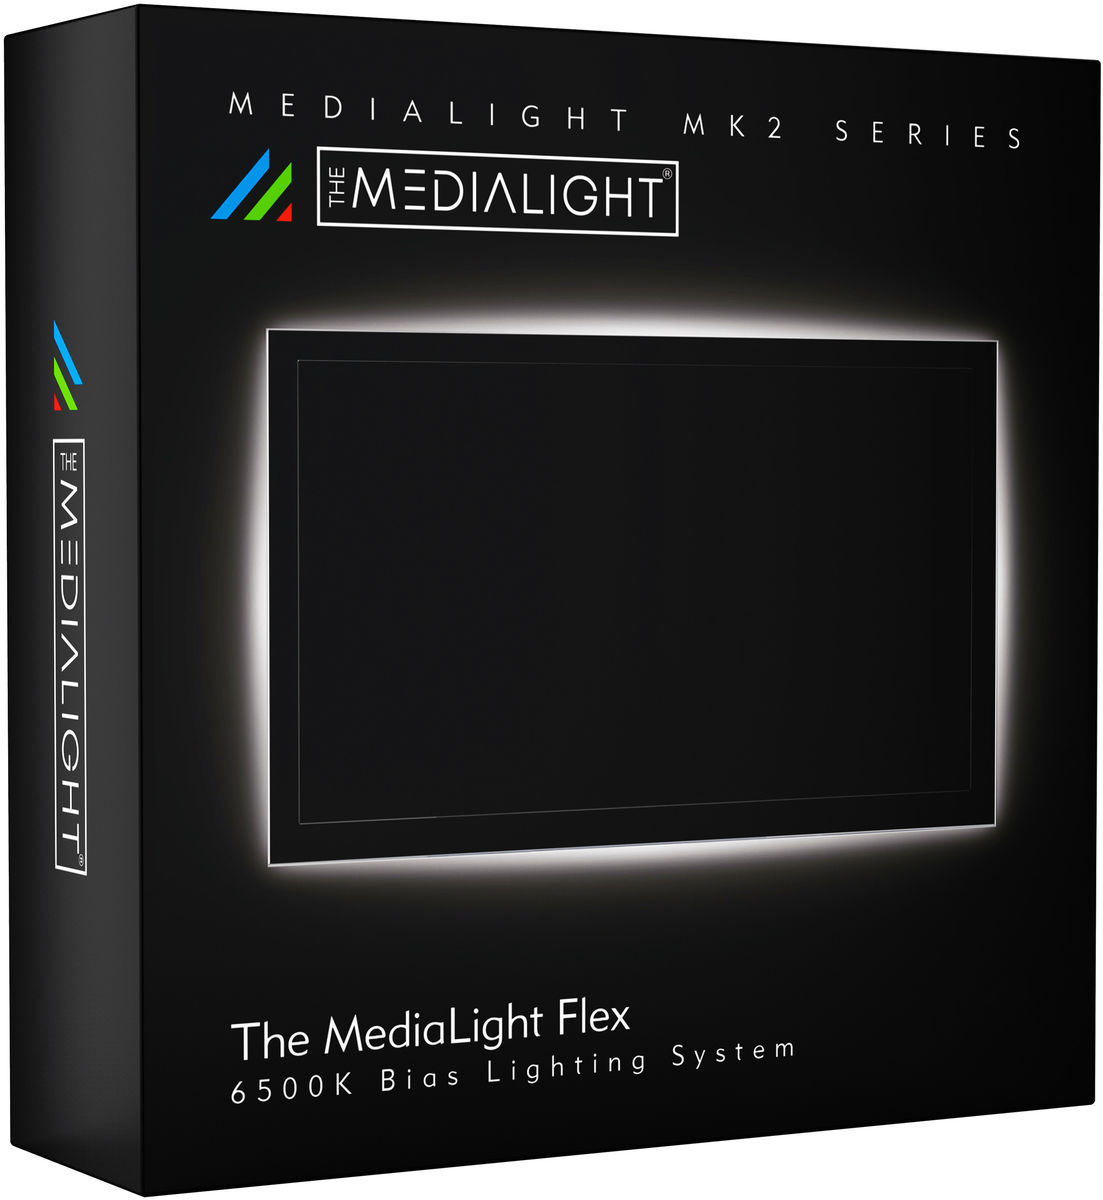 Accessoires TV Bias Lighting Medialight MK2 Flex (5 m)